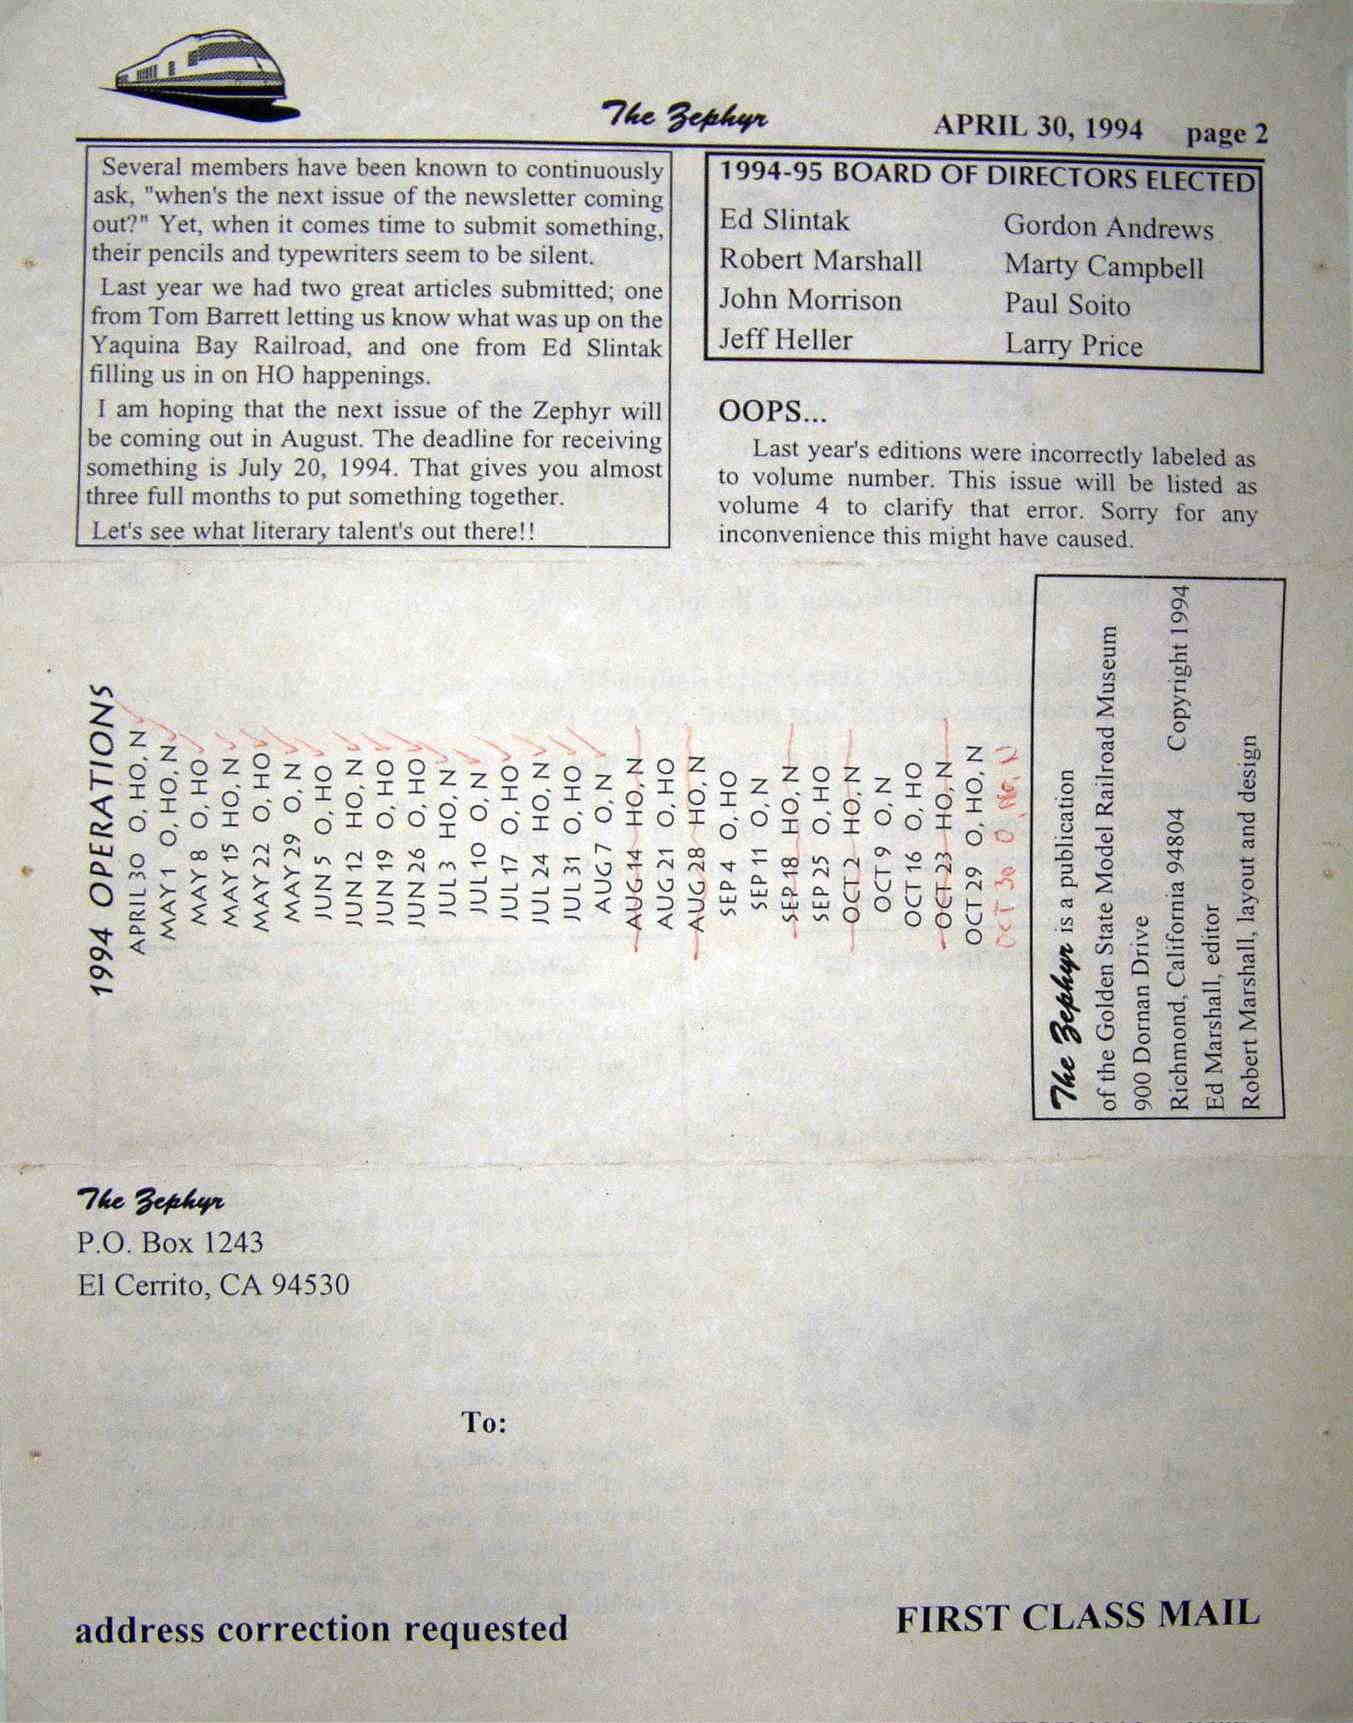 The Zephyr, back page 30 April 94